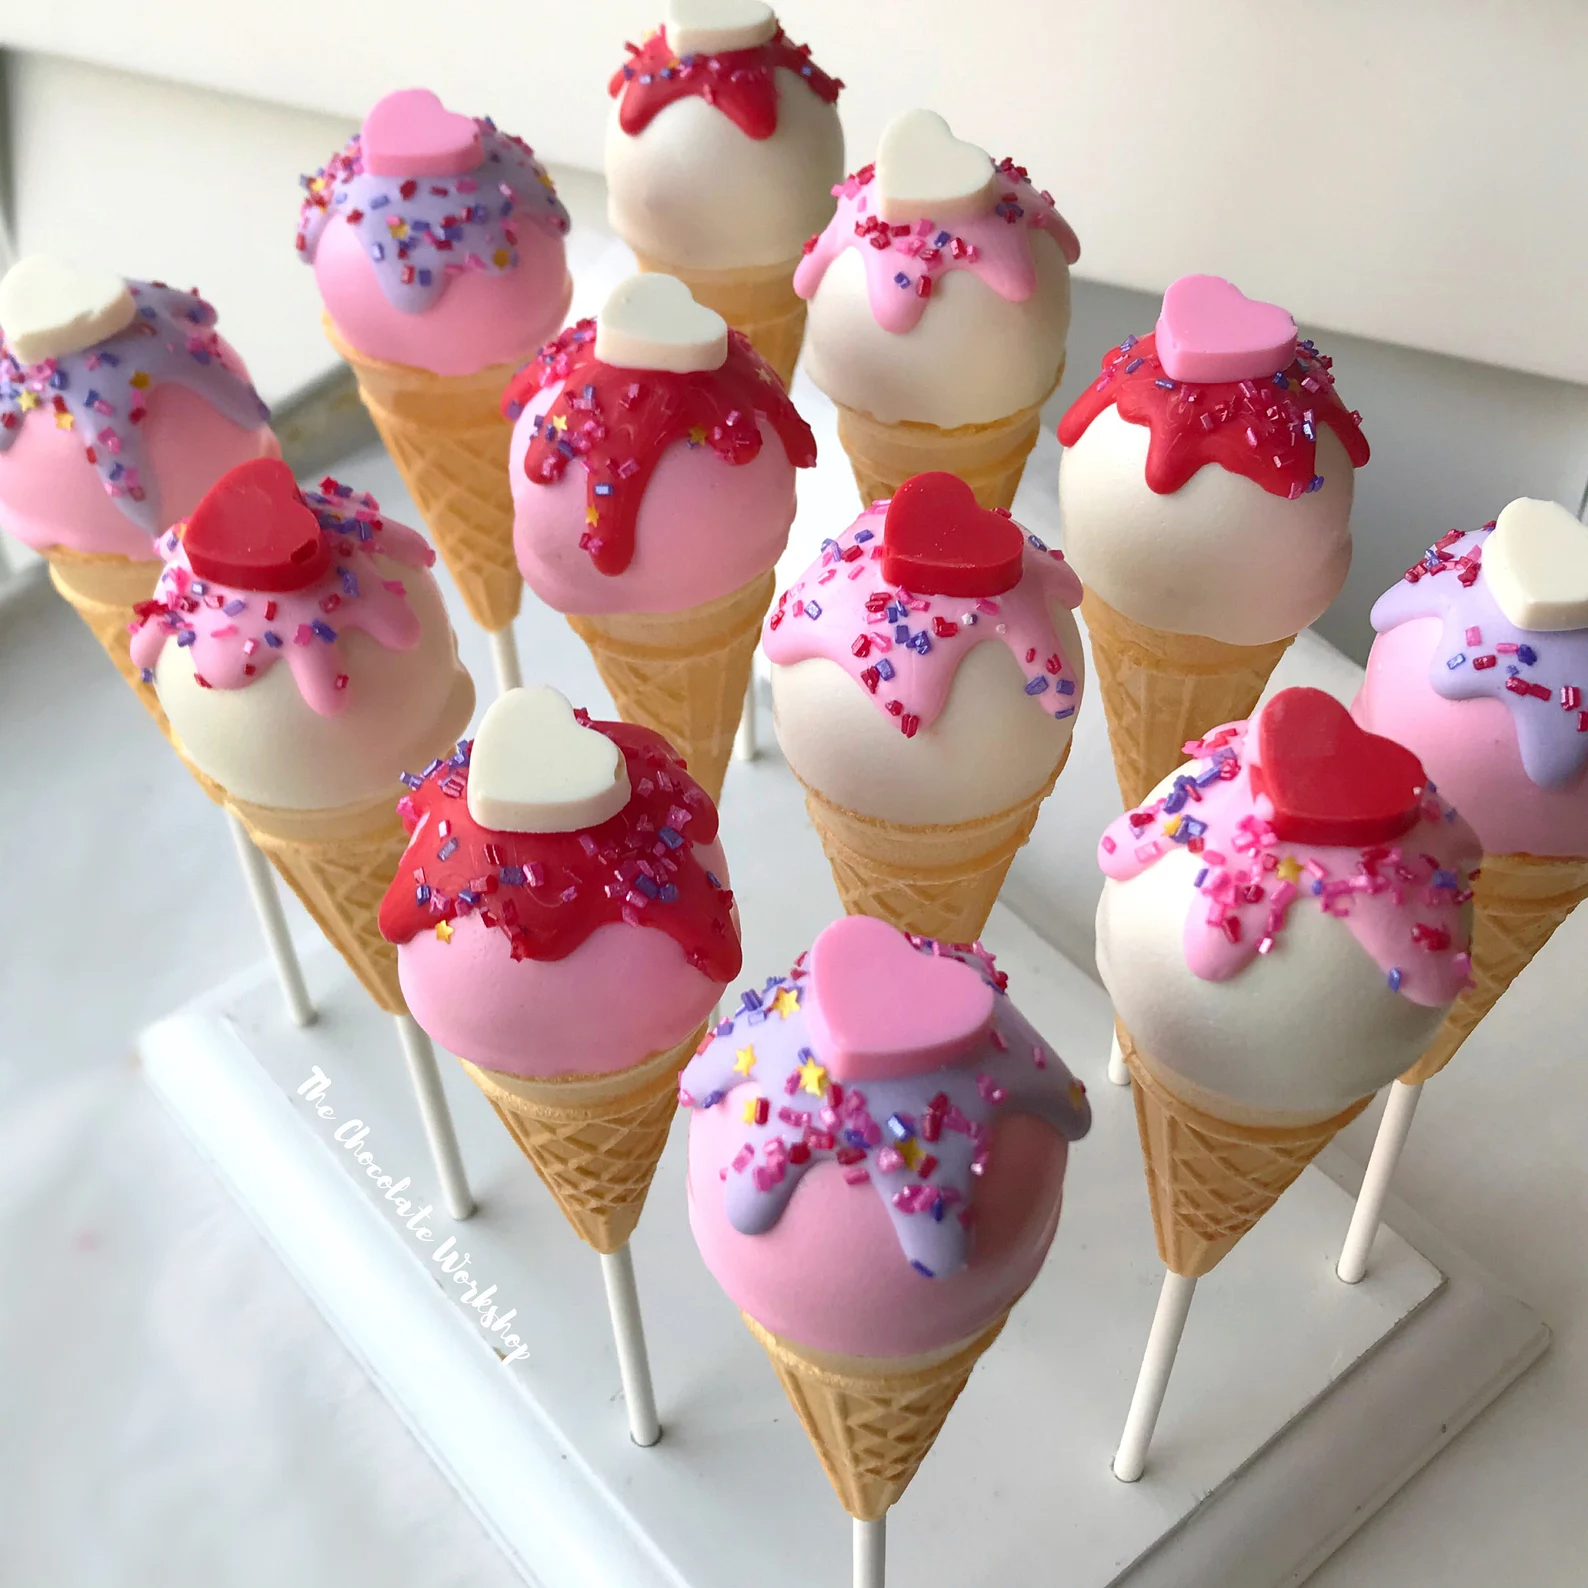 Ice Cream Cone Cake Pops – HCP